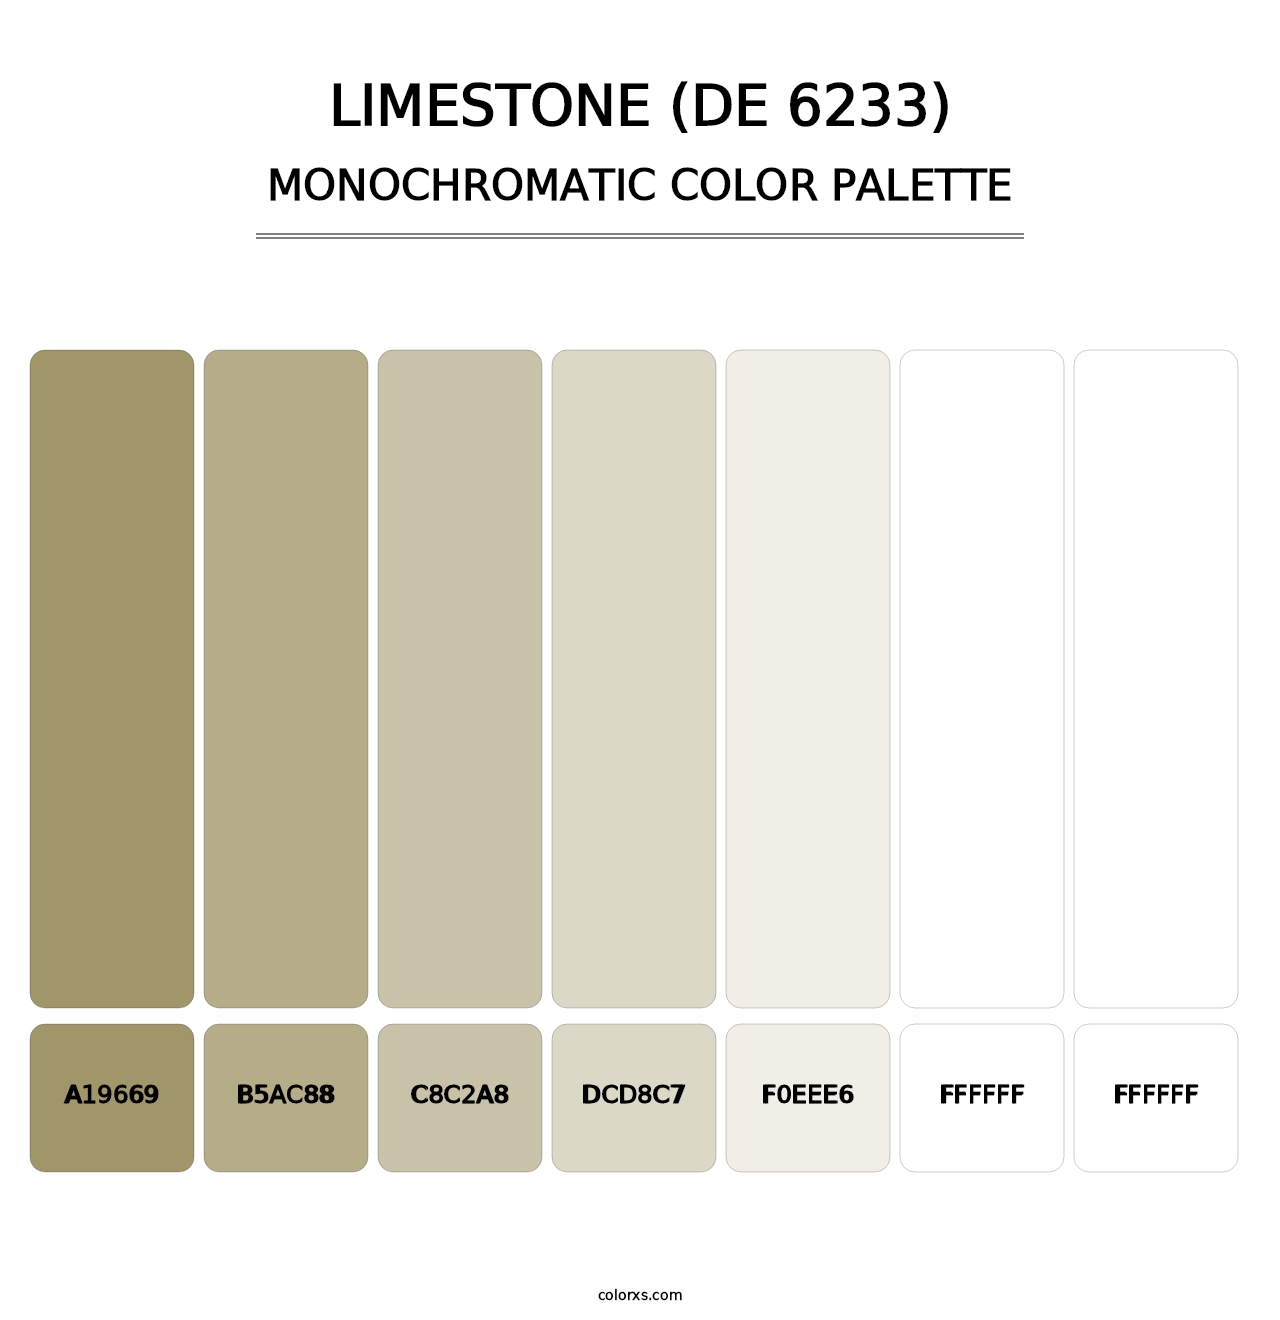 Limestone (DE 6233) - Monochromatic Color Palette